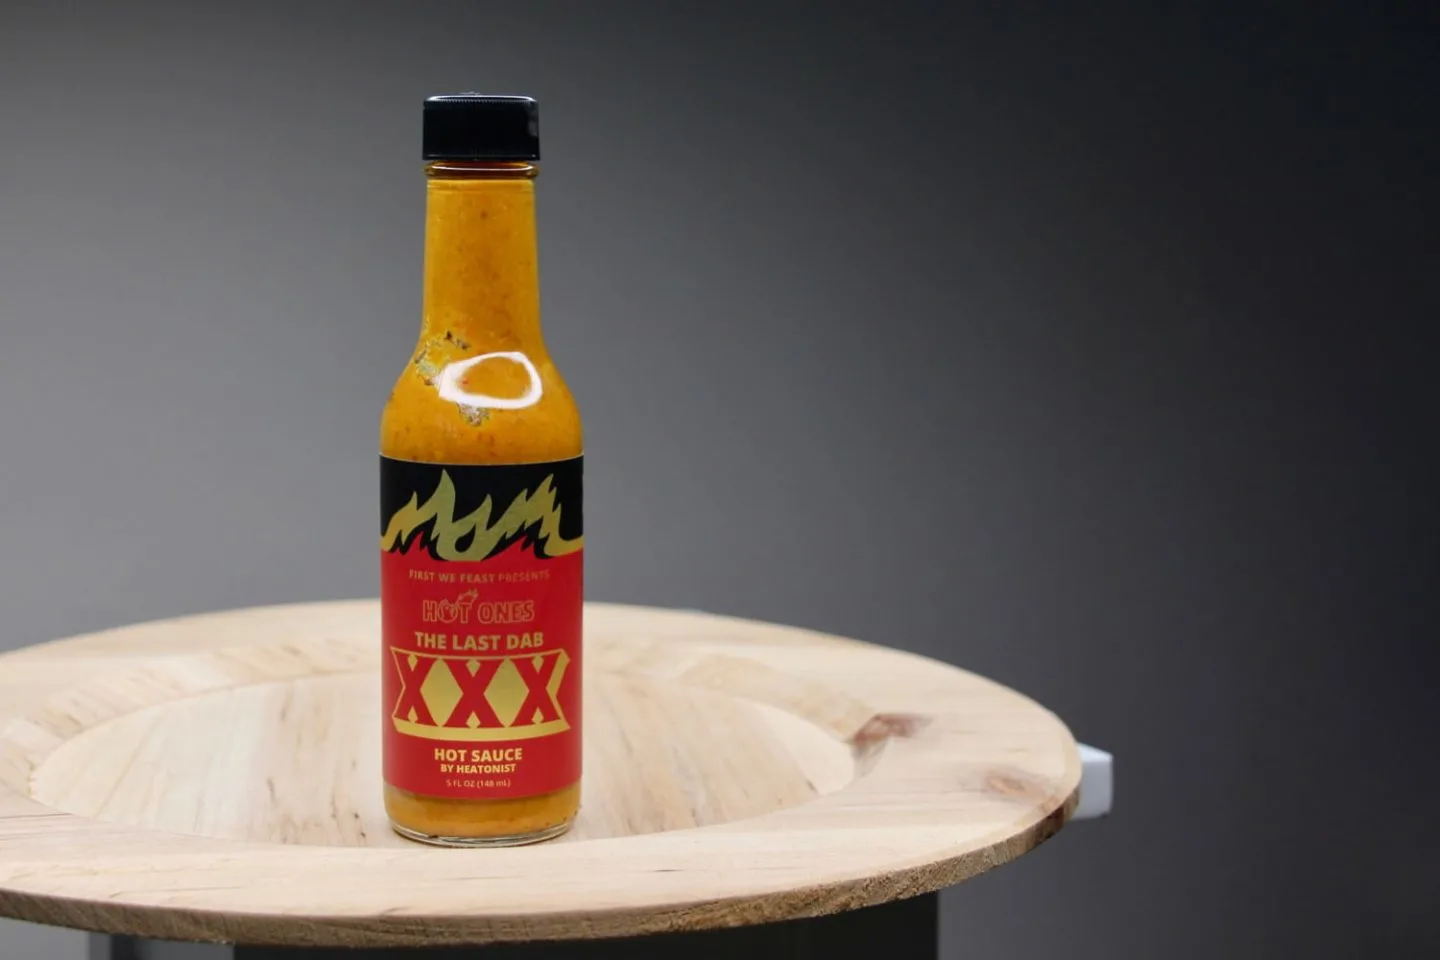 The Last Dab XXX Hot Sauce bottle